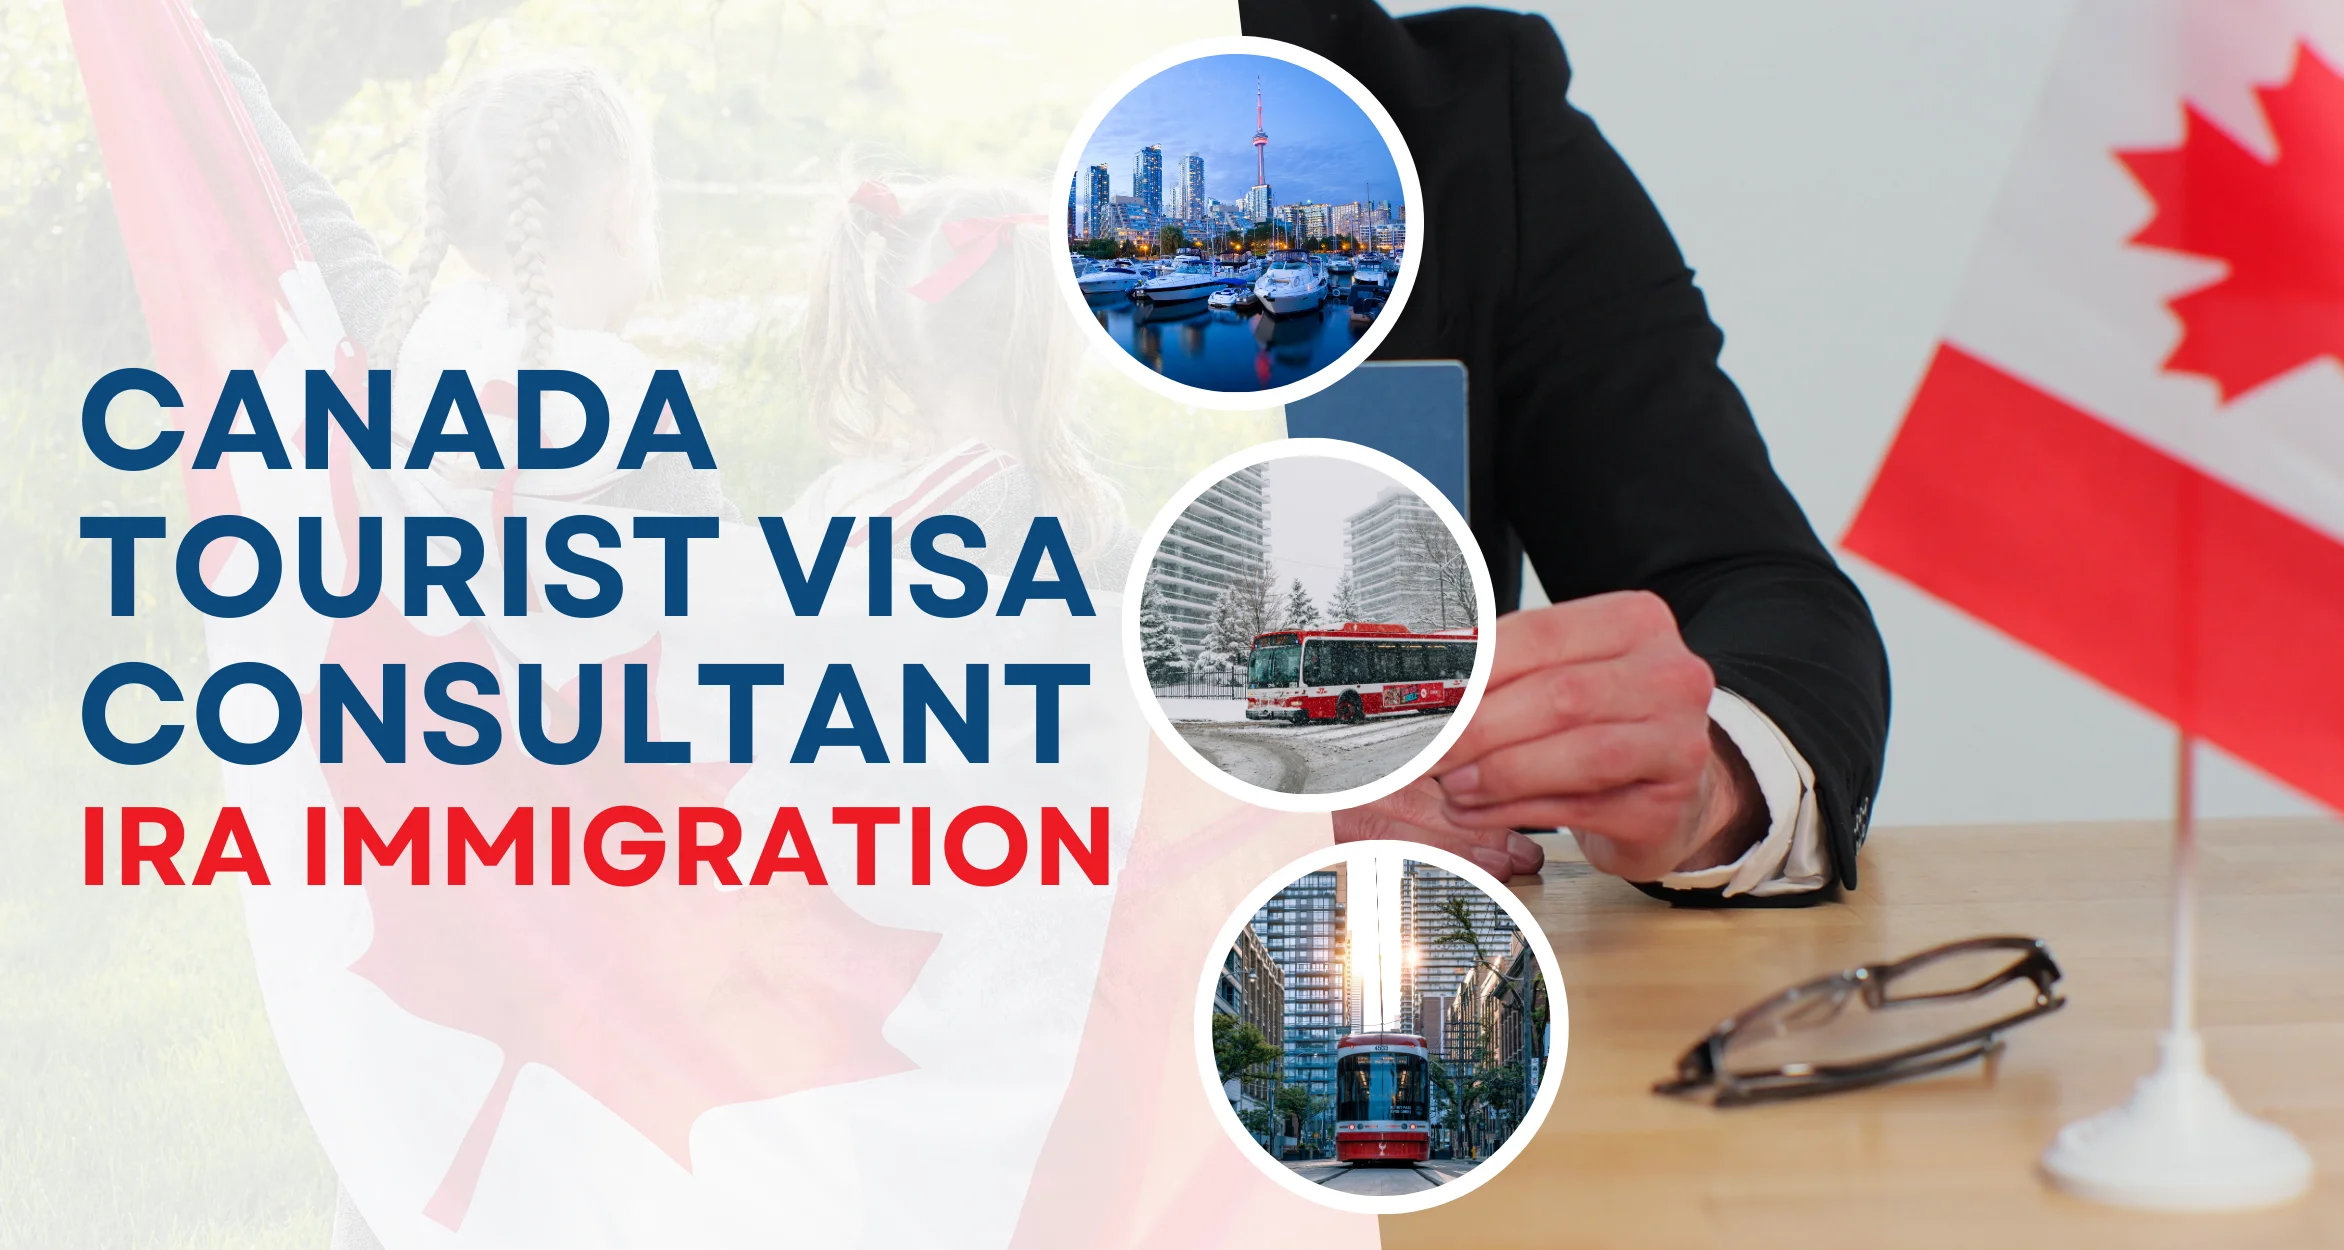 Canada Tourist visa consult with IRA immigration